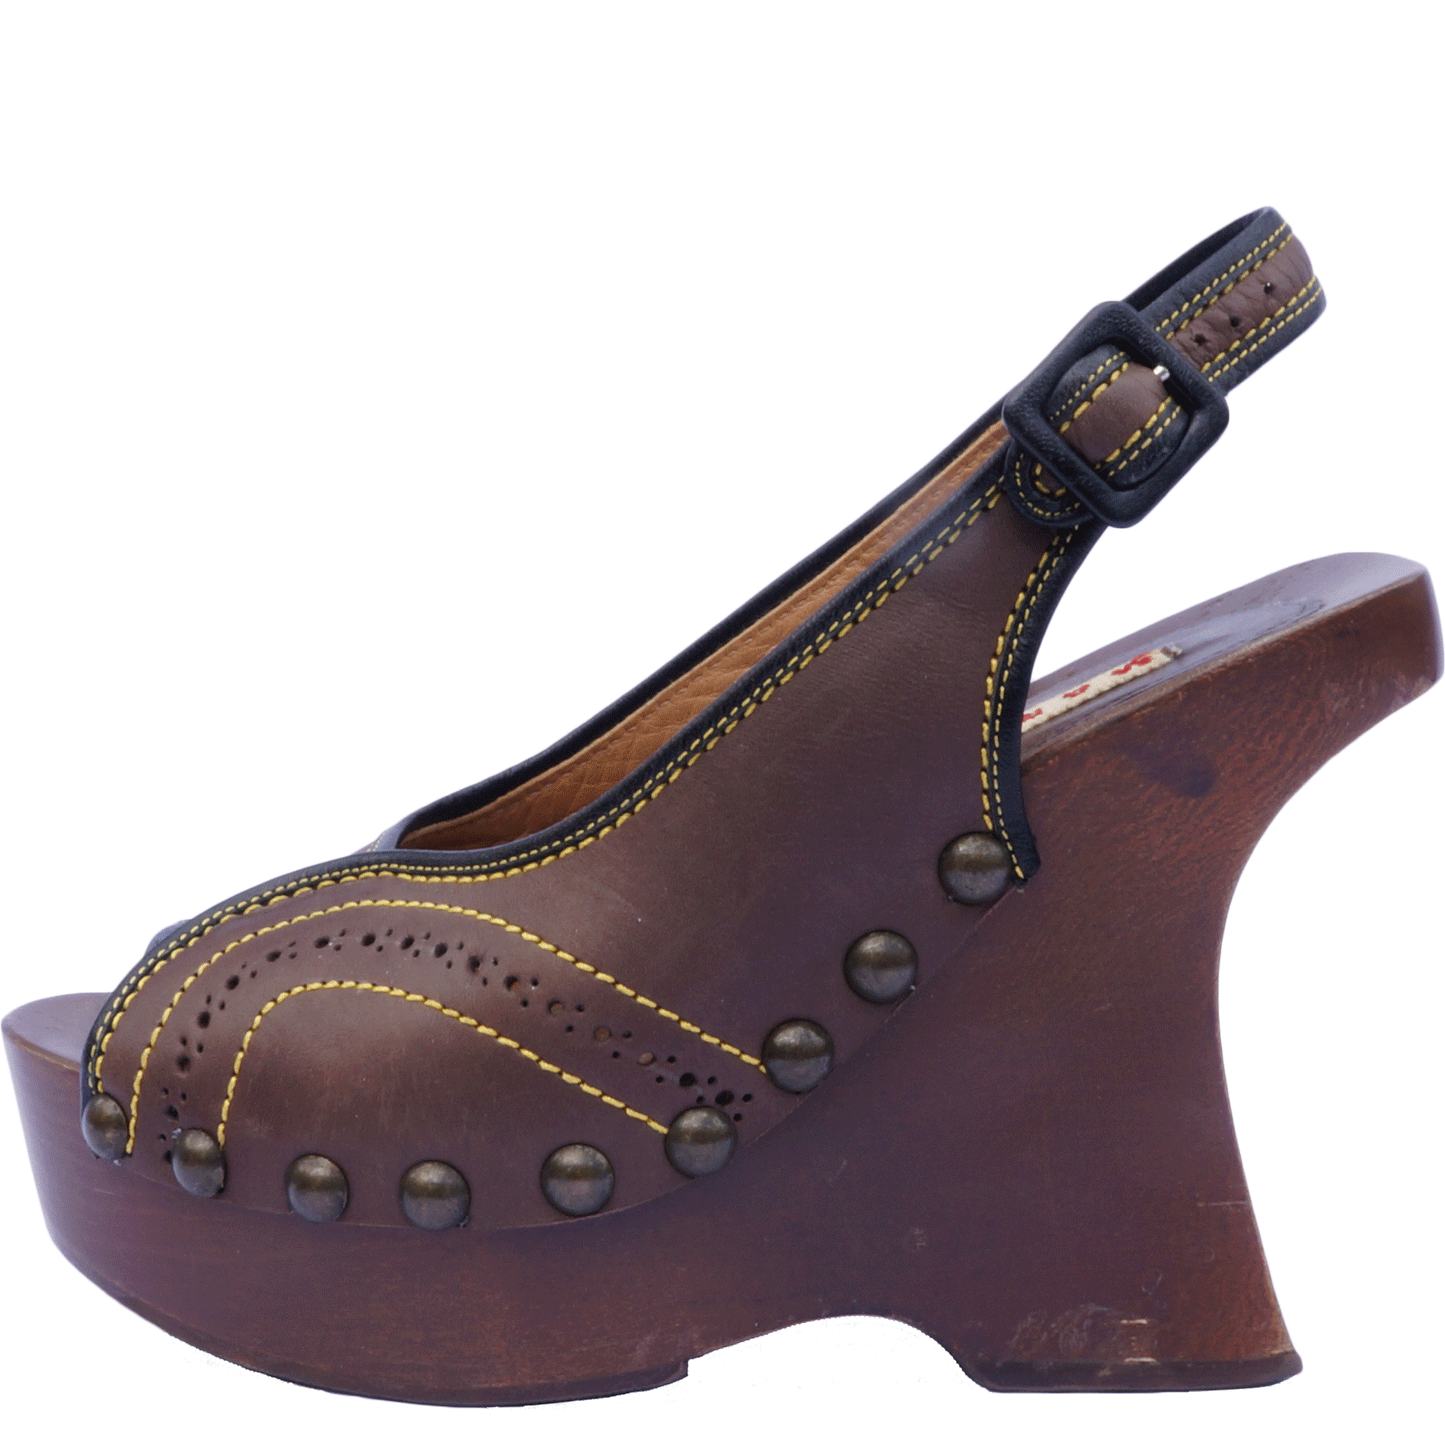 Marni brown leather wedge sandal, wood wedge heel, studded at leather. Vintage 1990's